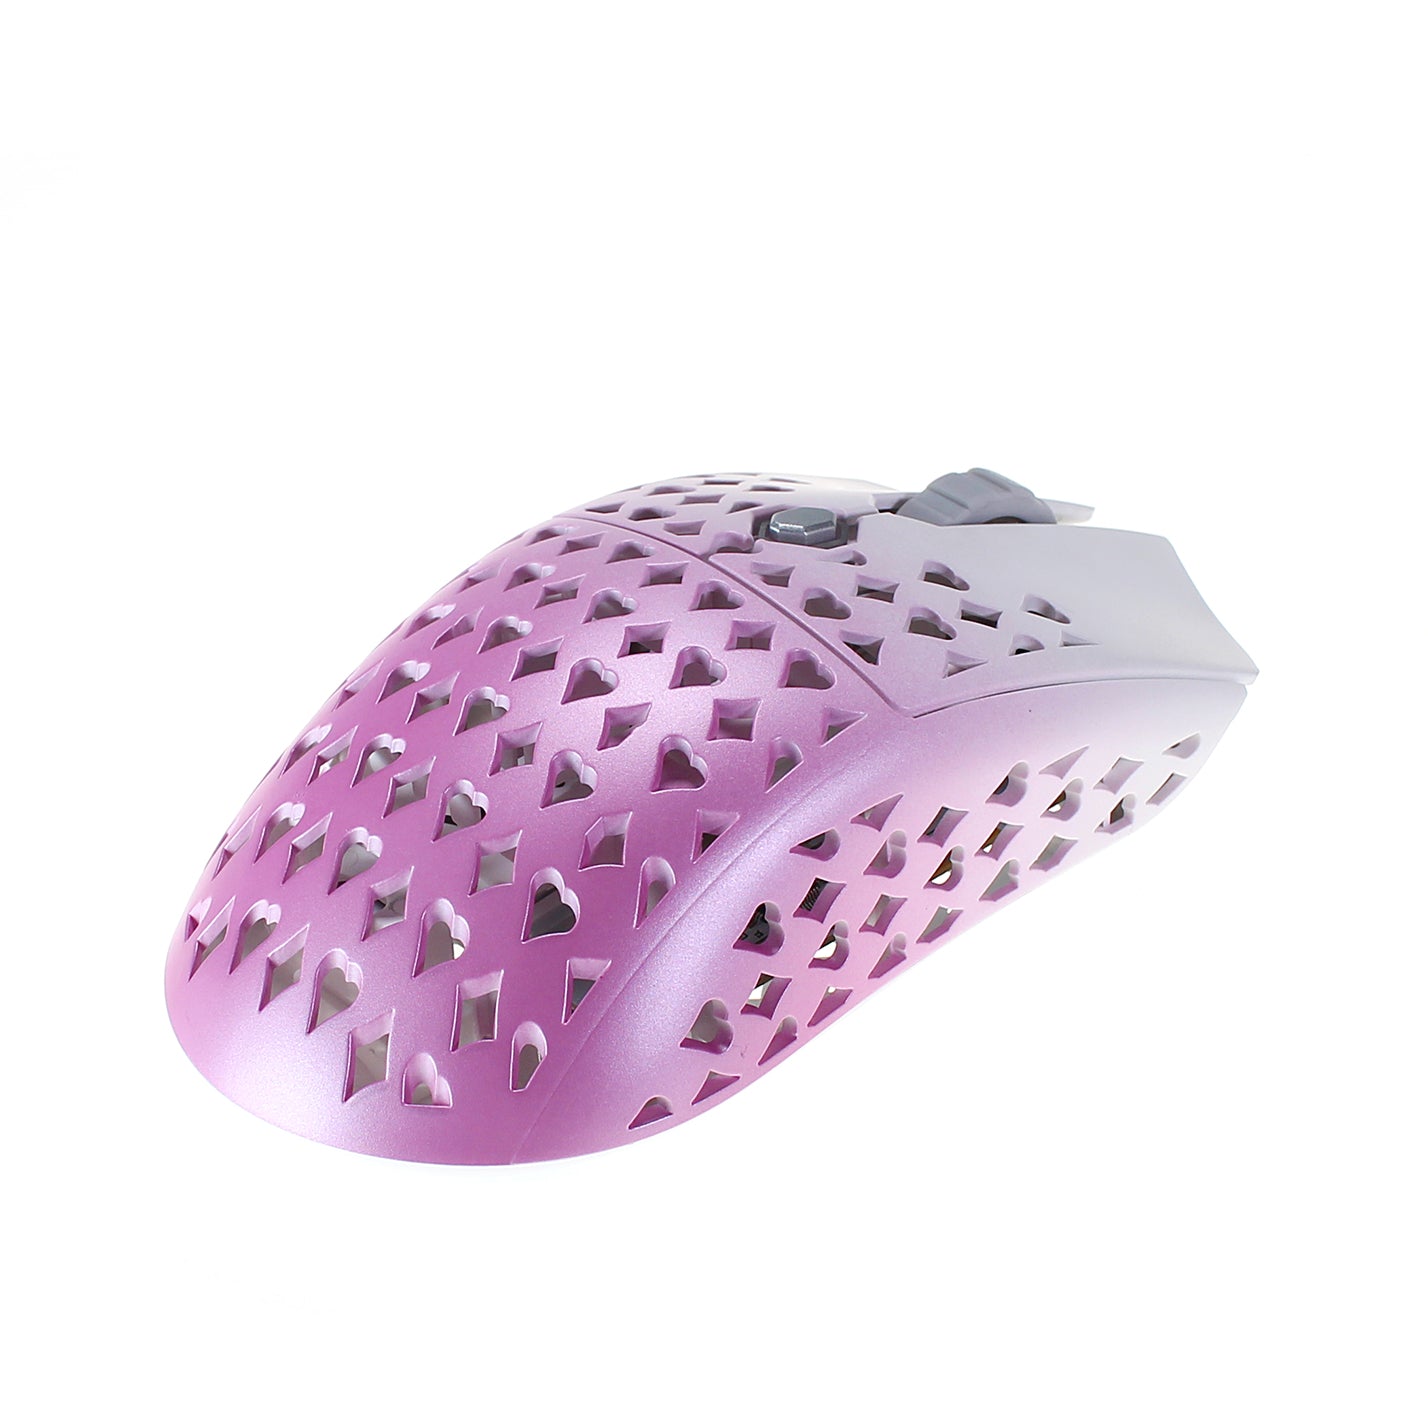 Vancer™ Gretxa Wireless Gaming Mouse V2 - Pink